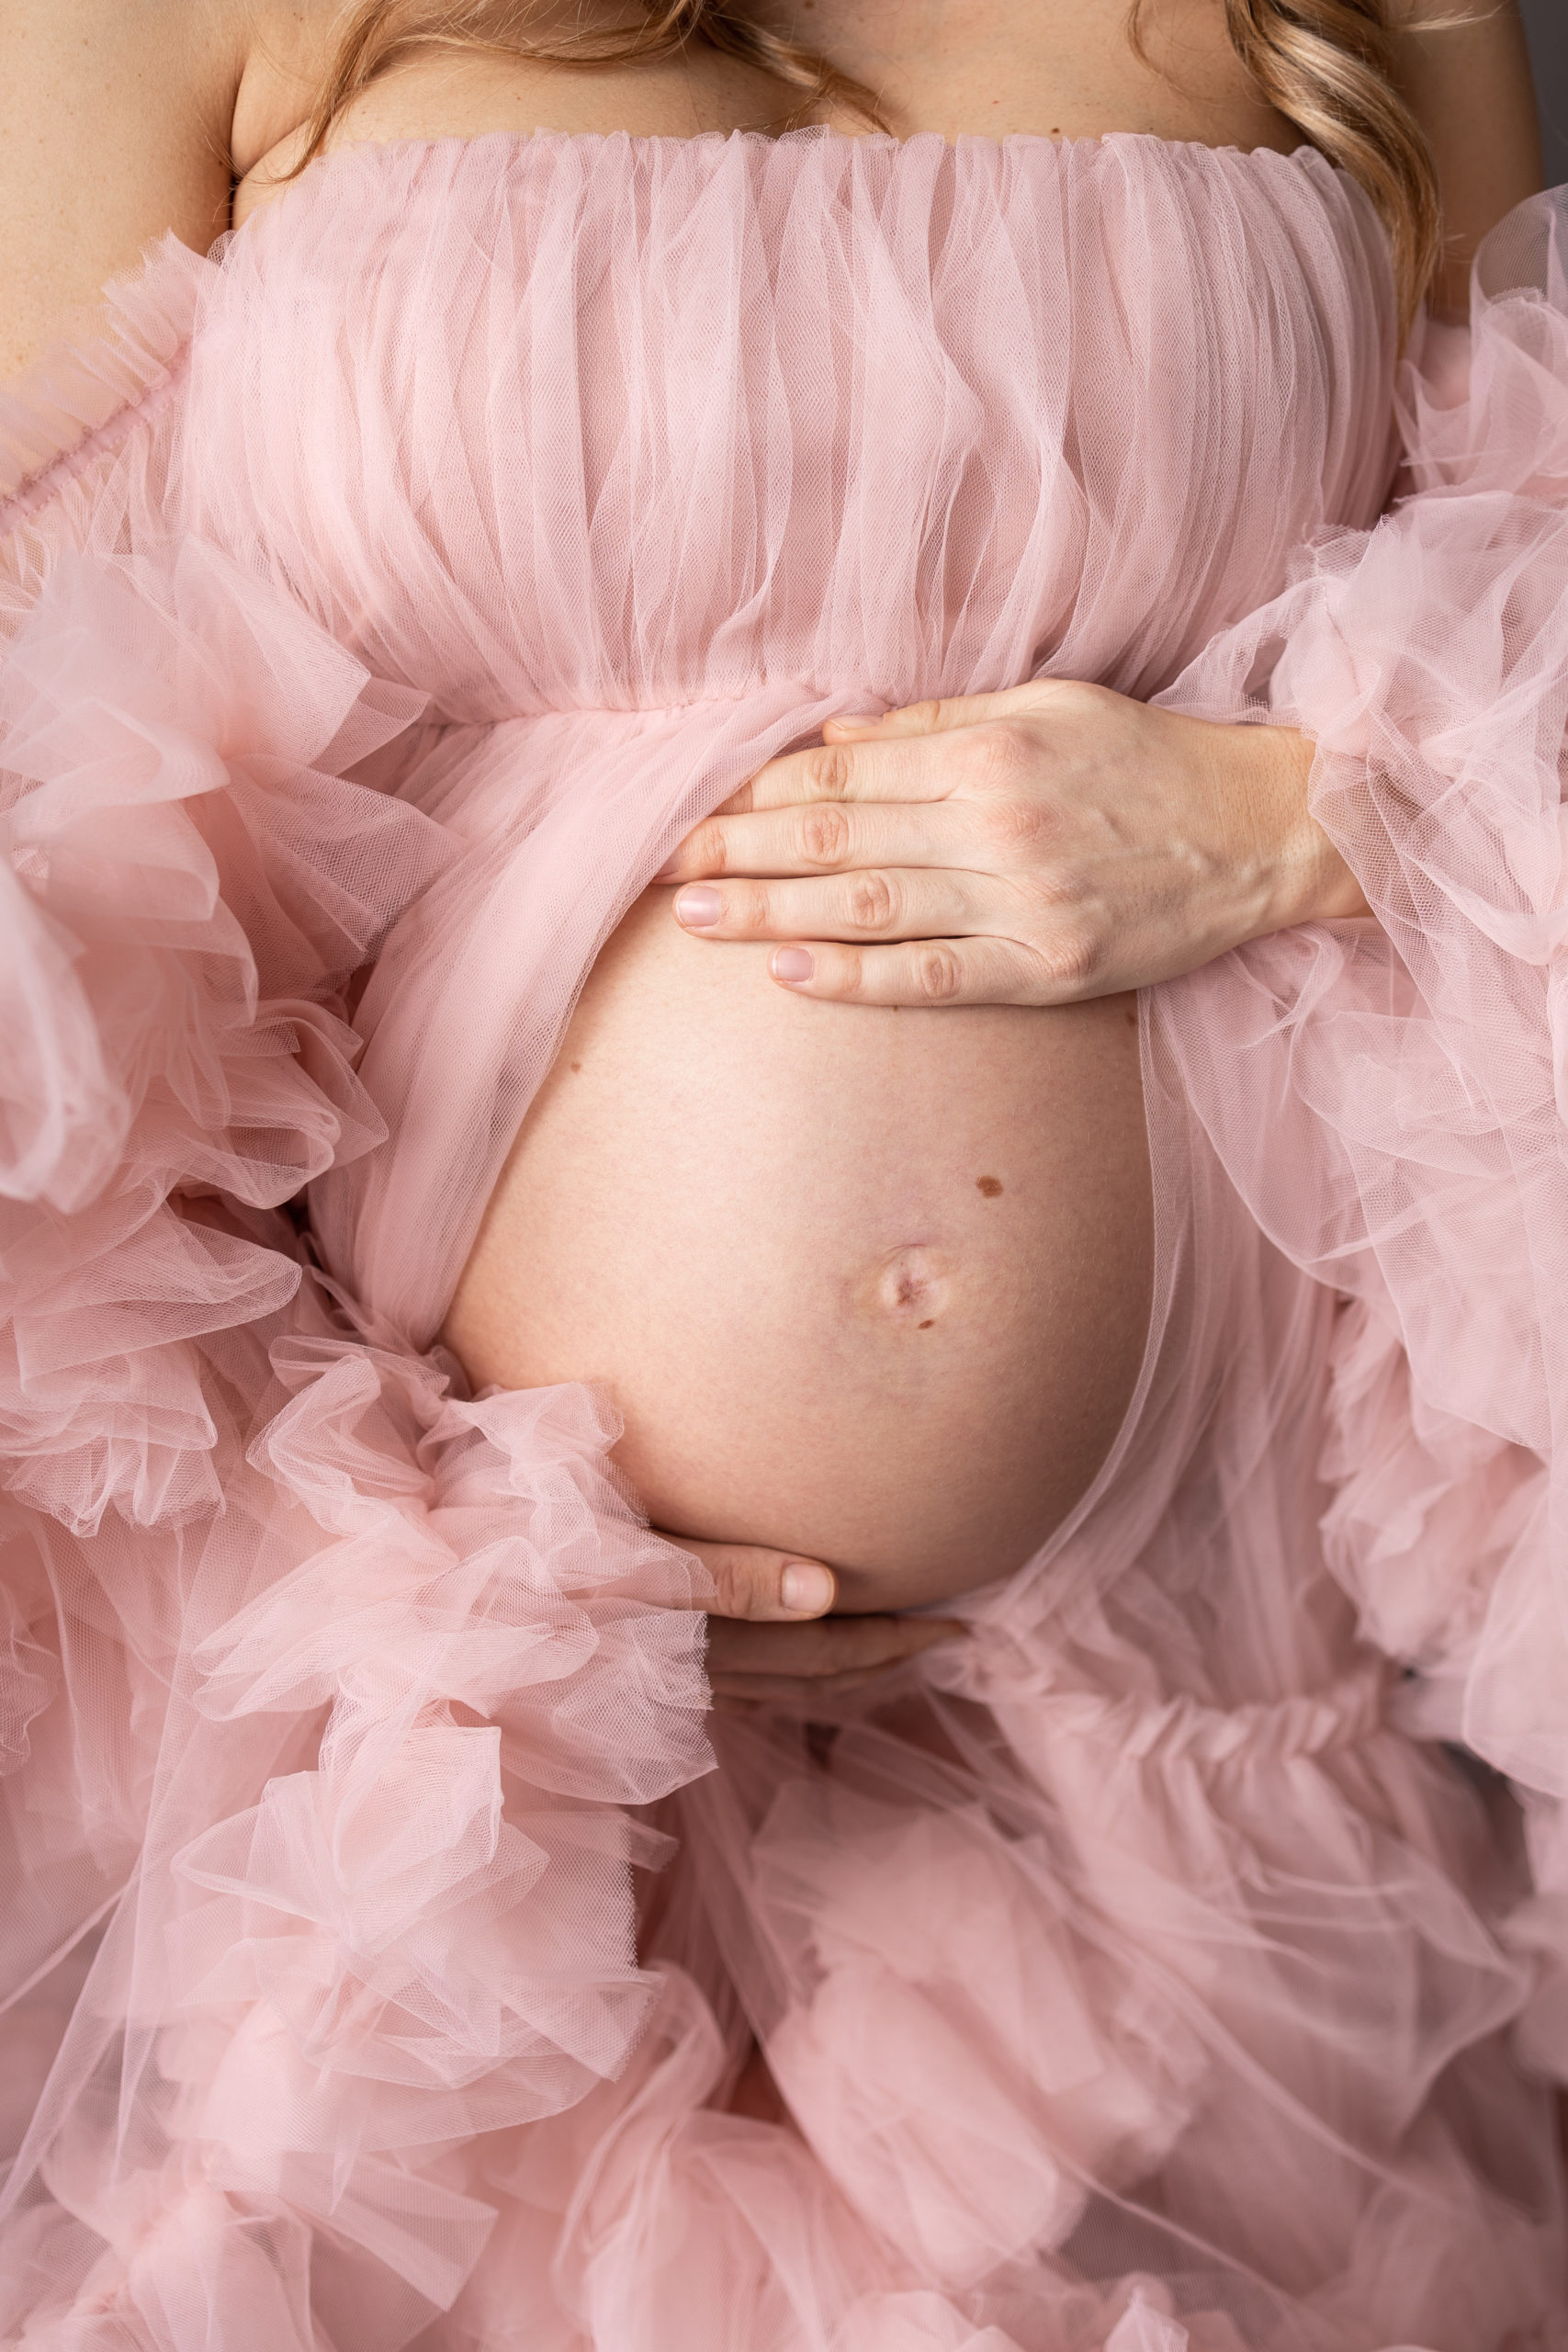 schwangerschaftsfotograf | schwangerschafts fotografie | babybauch fotos | fotostudio luedenscheid